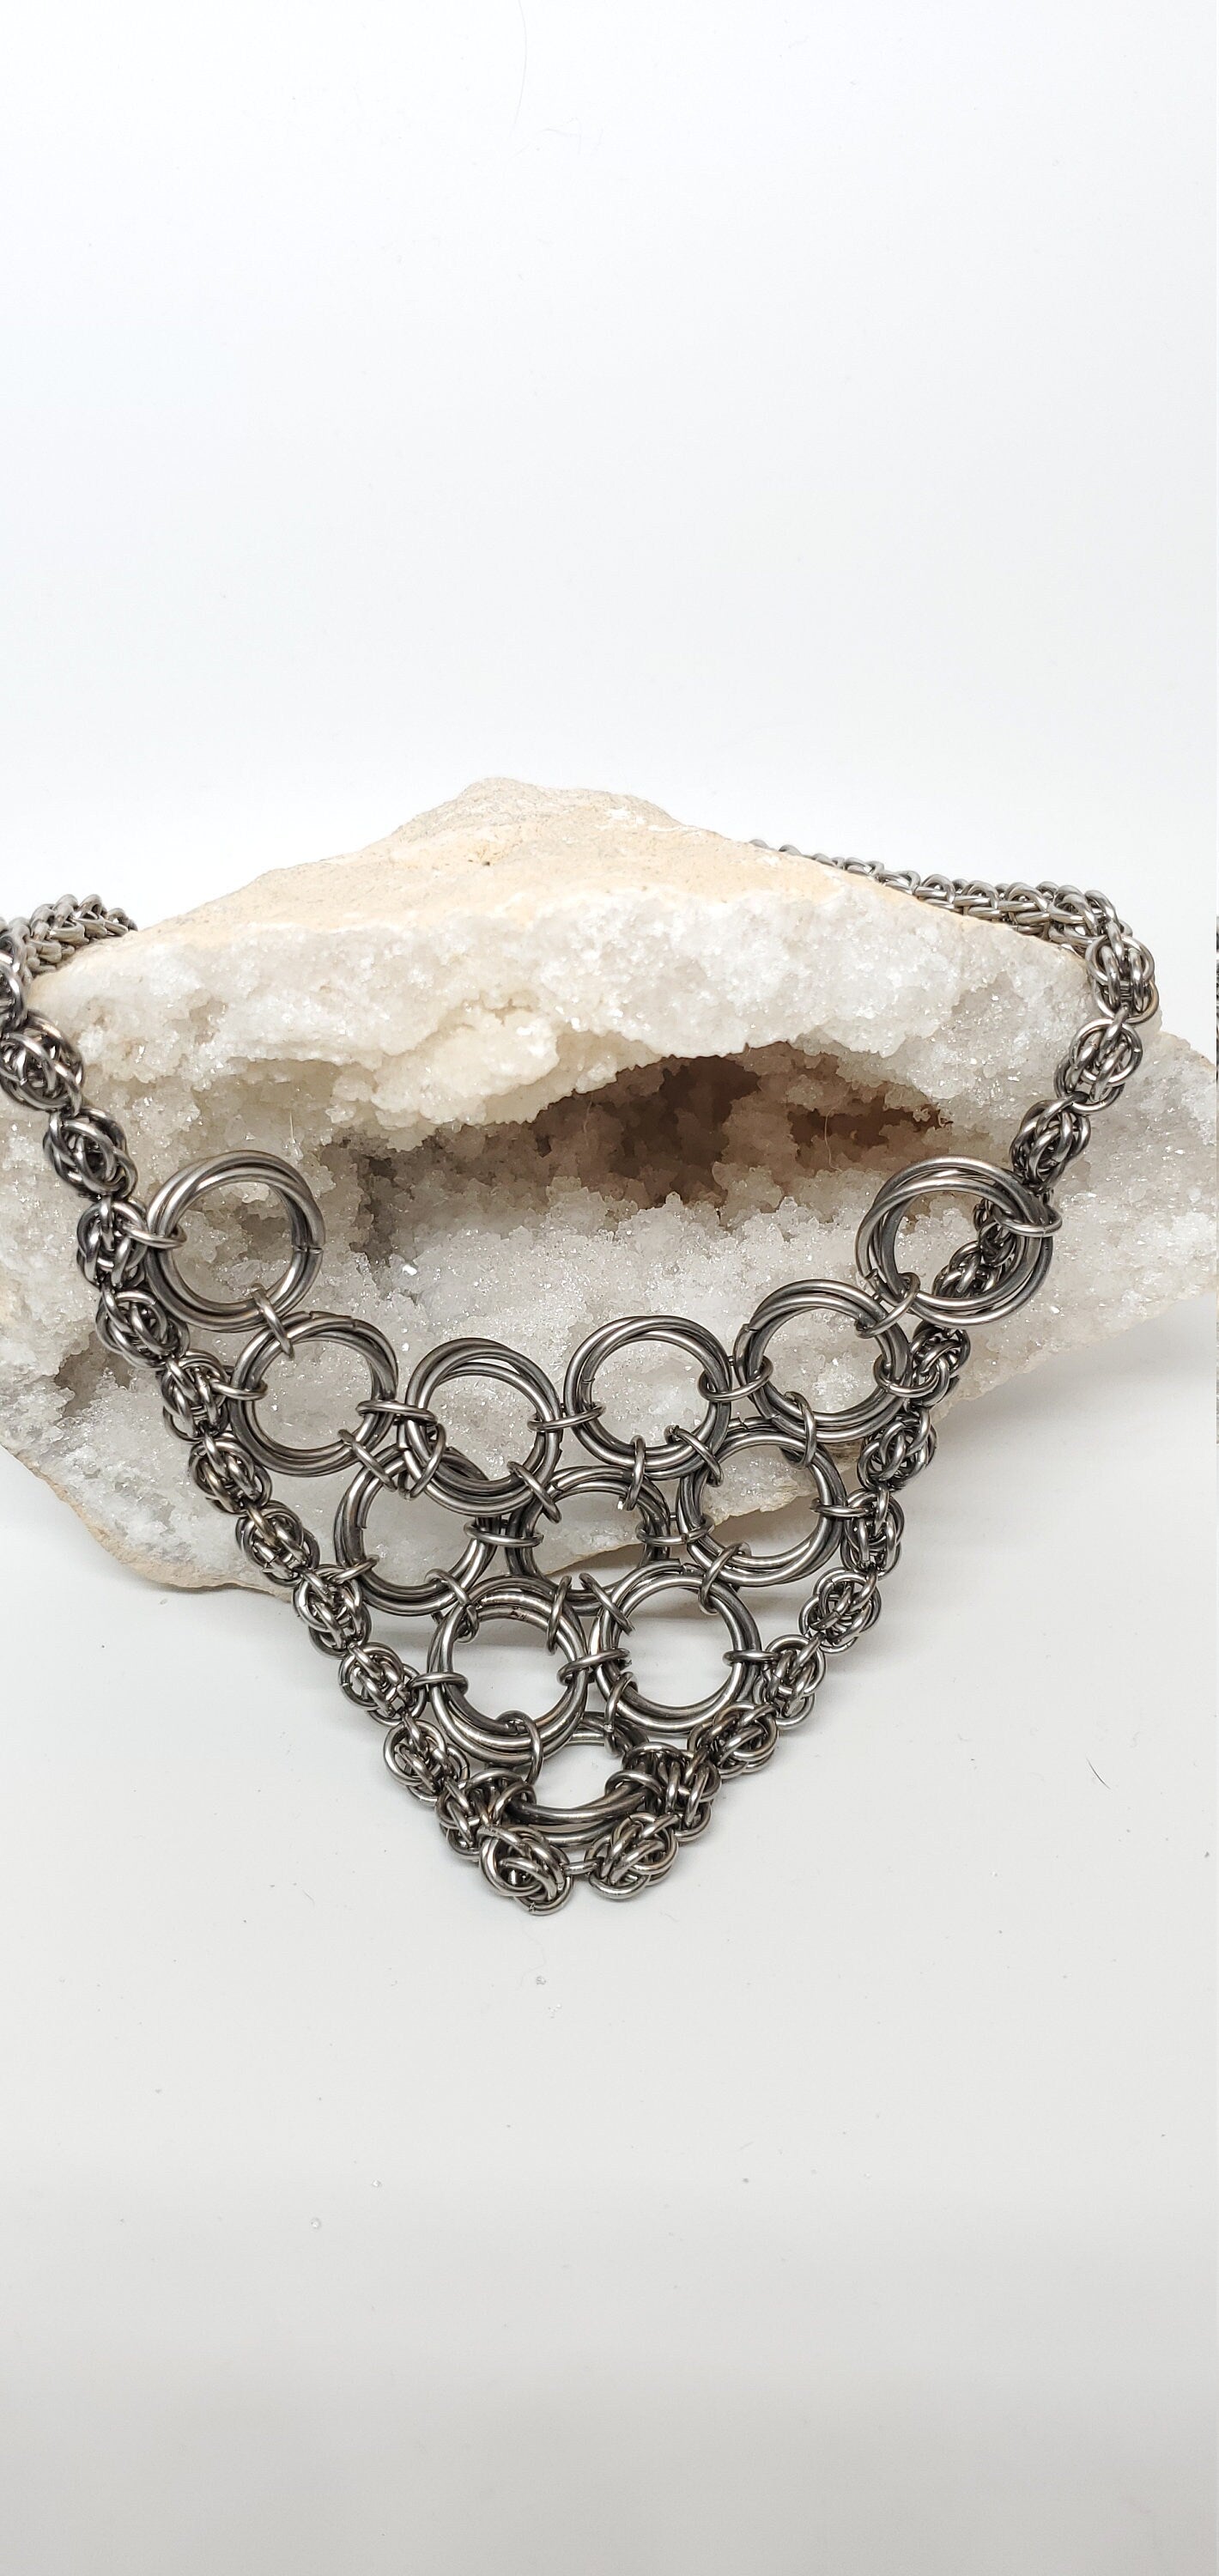 Stainless Steel Statement Necklace - Bib chainmaille Necklace - Gifts for Her - Statement Bib Necklace For Women